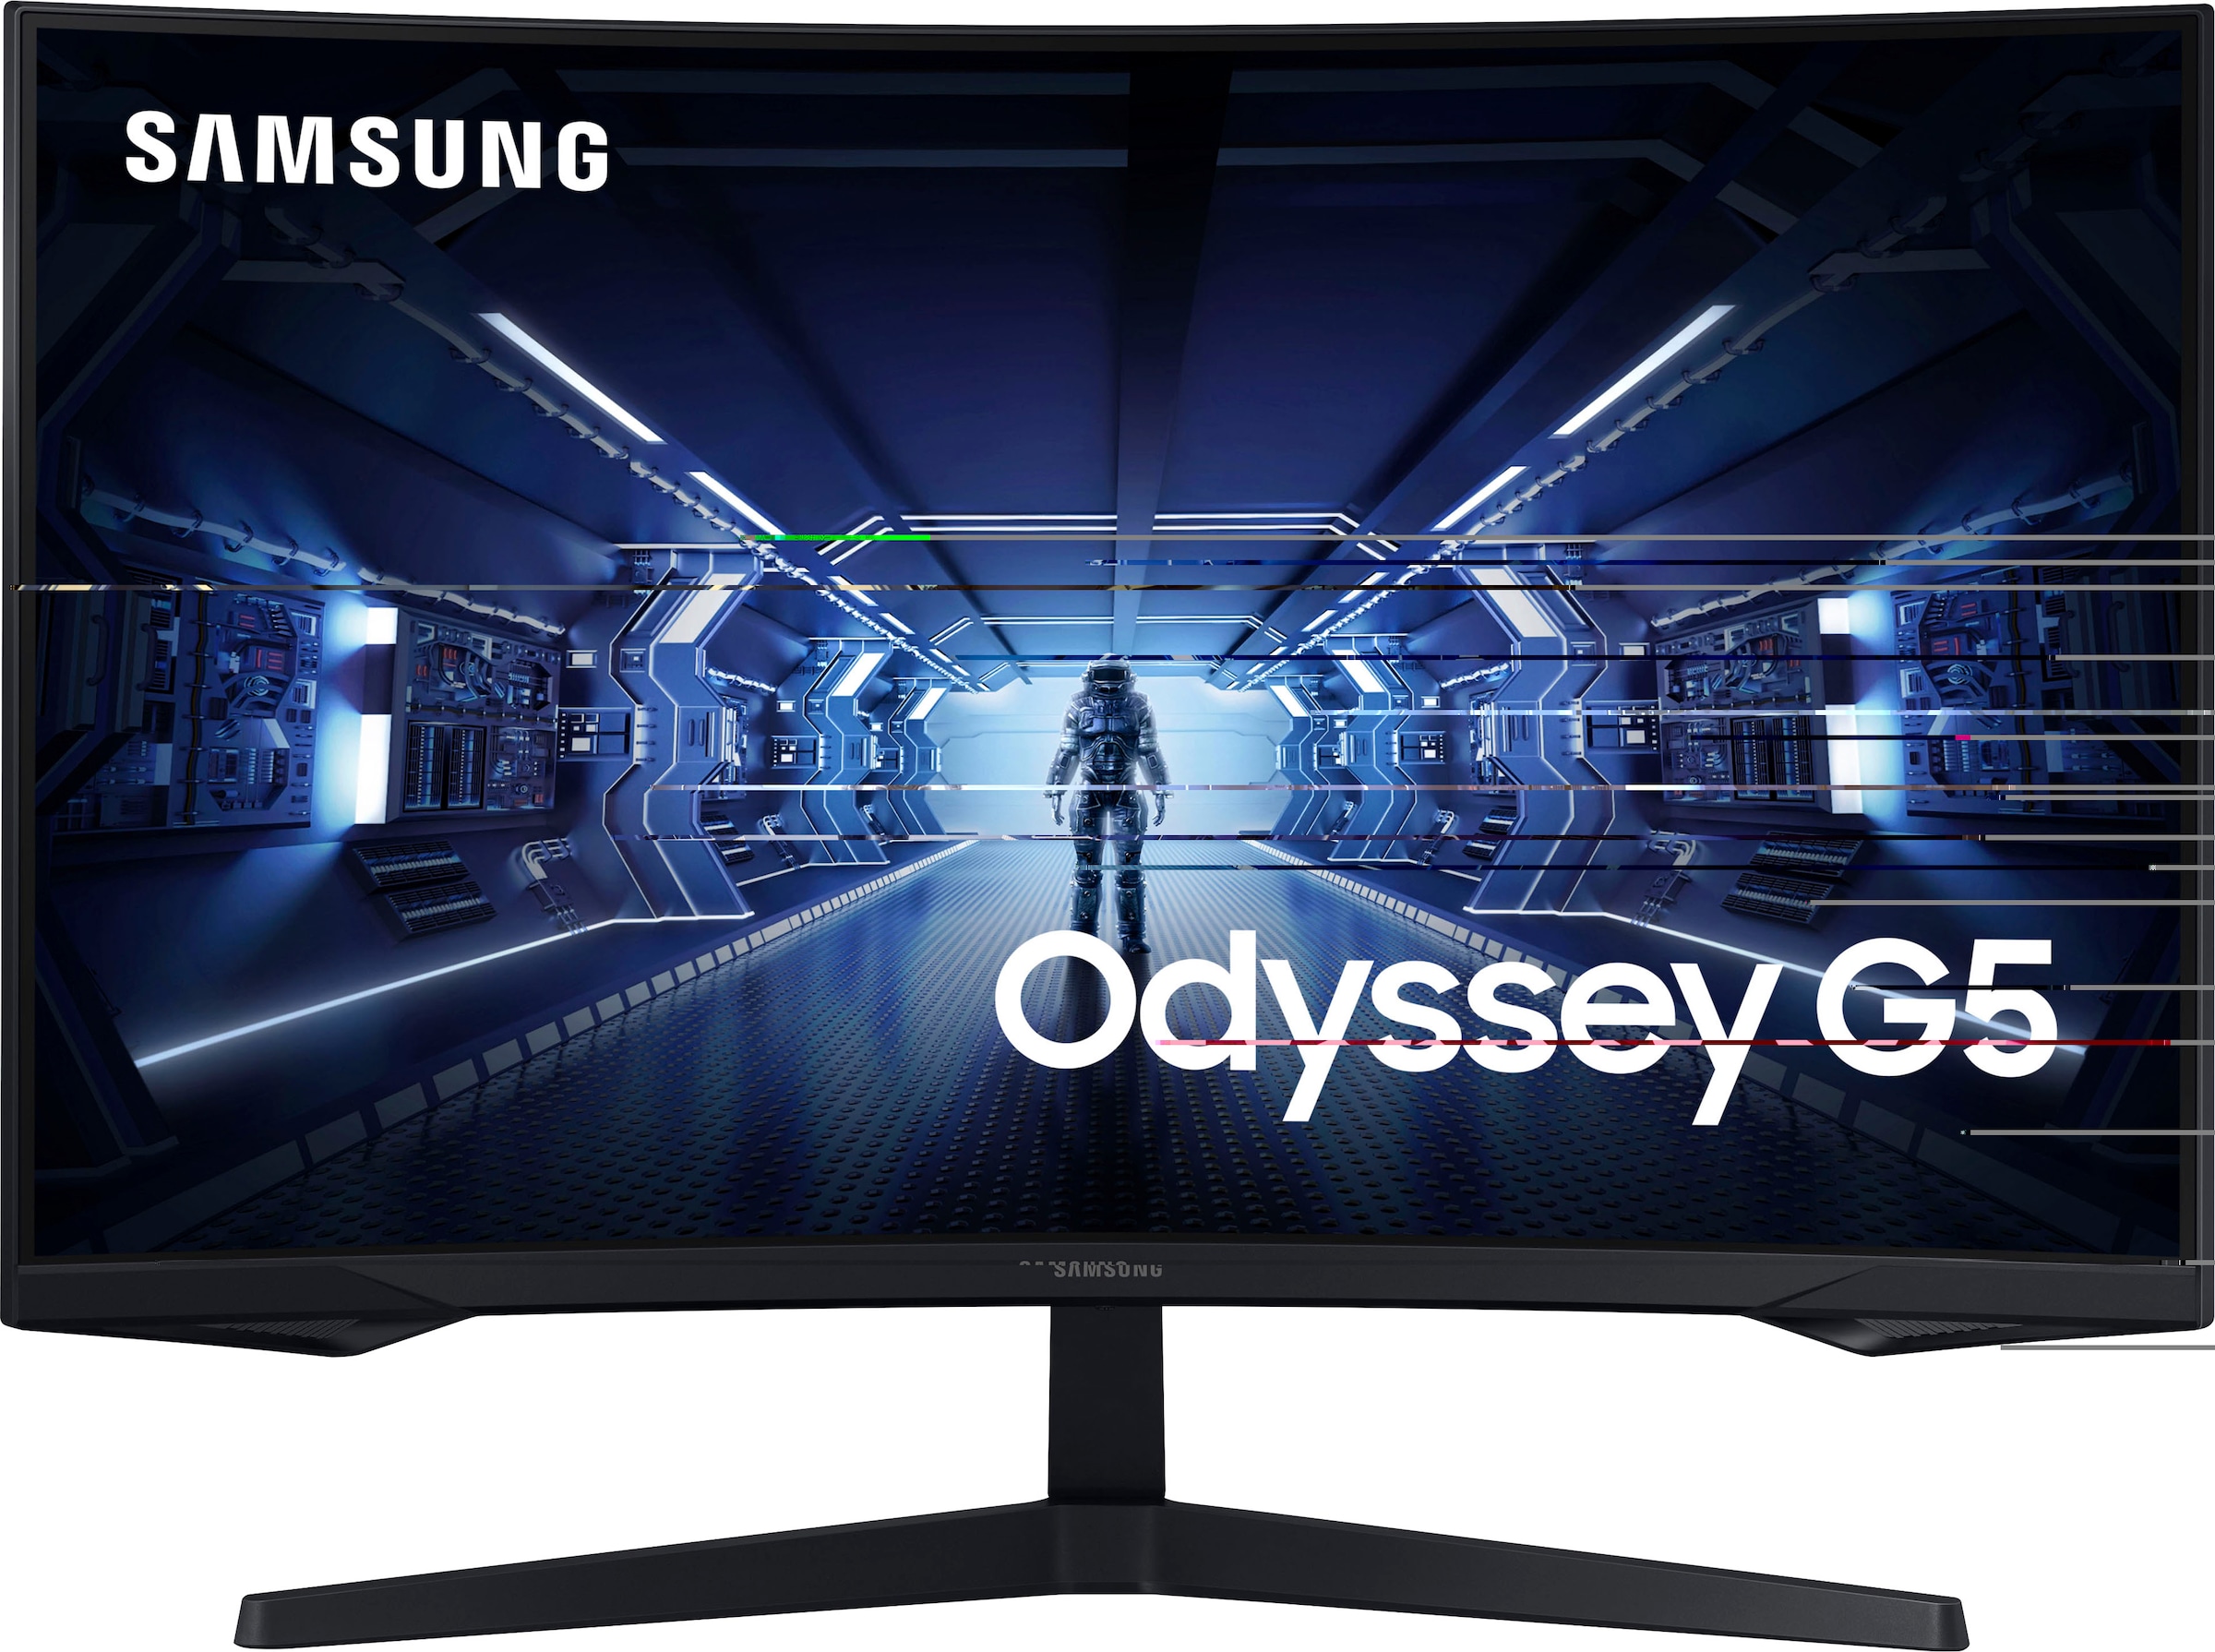 Samsung Curved-Gaming-LED-Monitor 1ms (MPRT) WQHD, G5 bei OTTO 2560 C32G54TQBU«, bestellen 80 »Odyssey cm/32 px, x Zoll, 1440